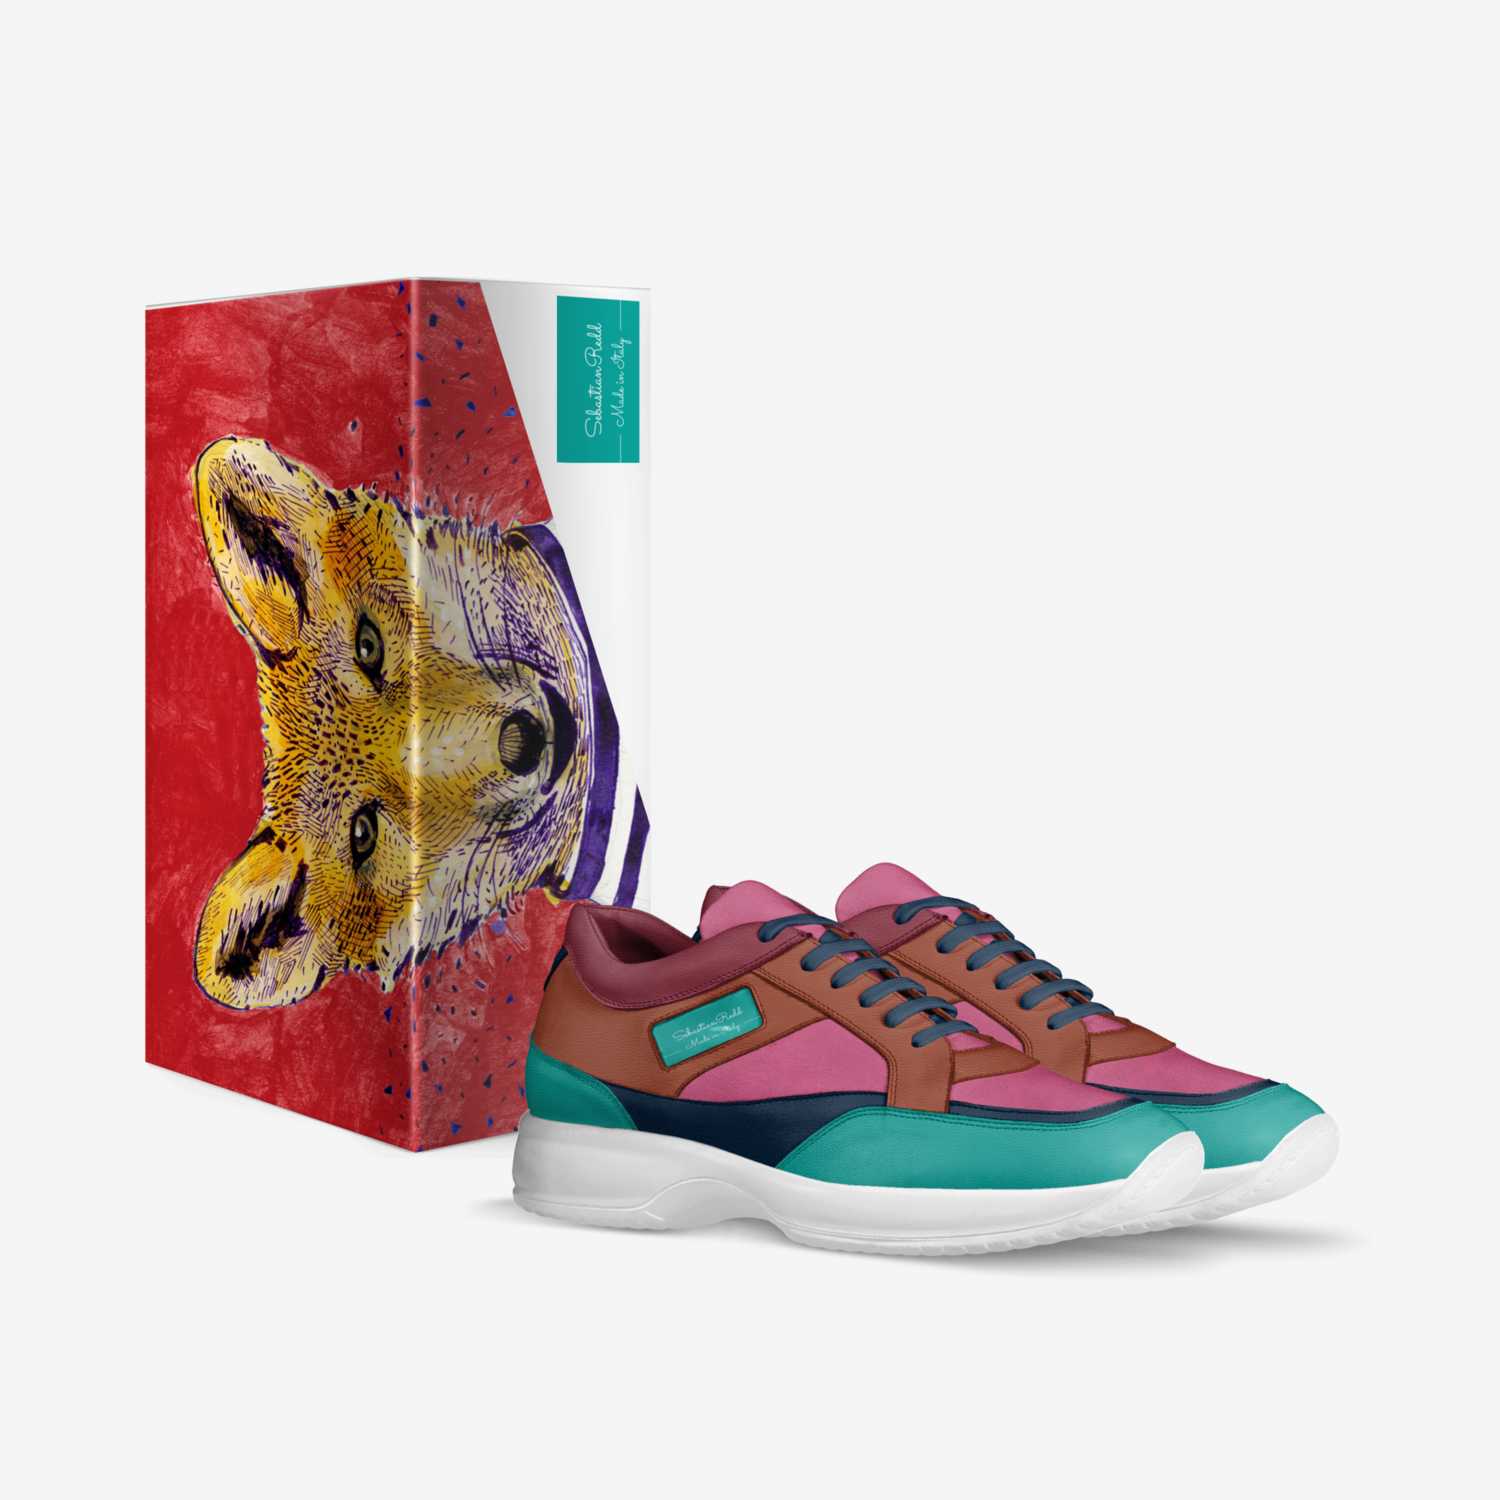 SebastianRedd custom made in Italy shoes by Tayvon Murray | Box view